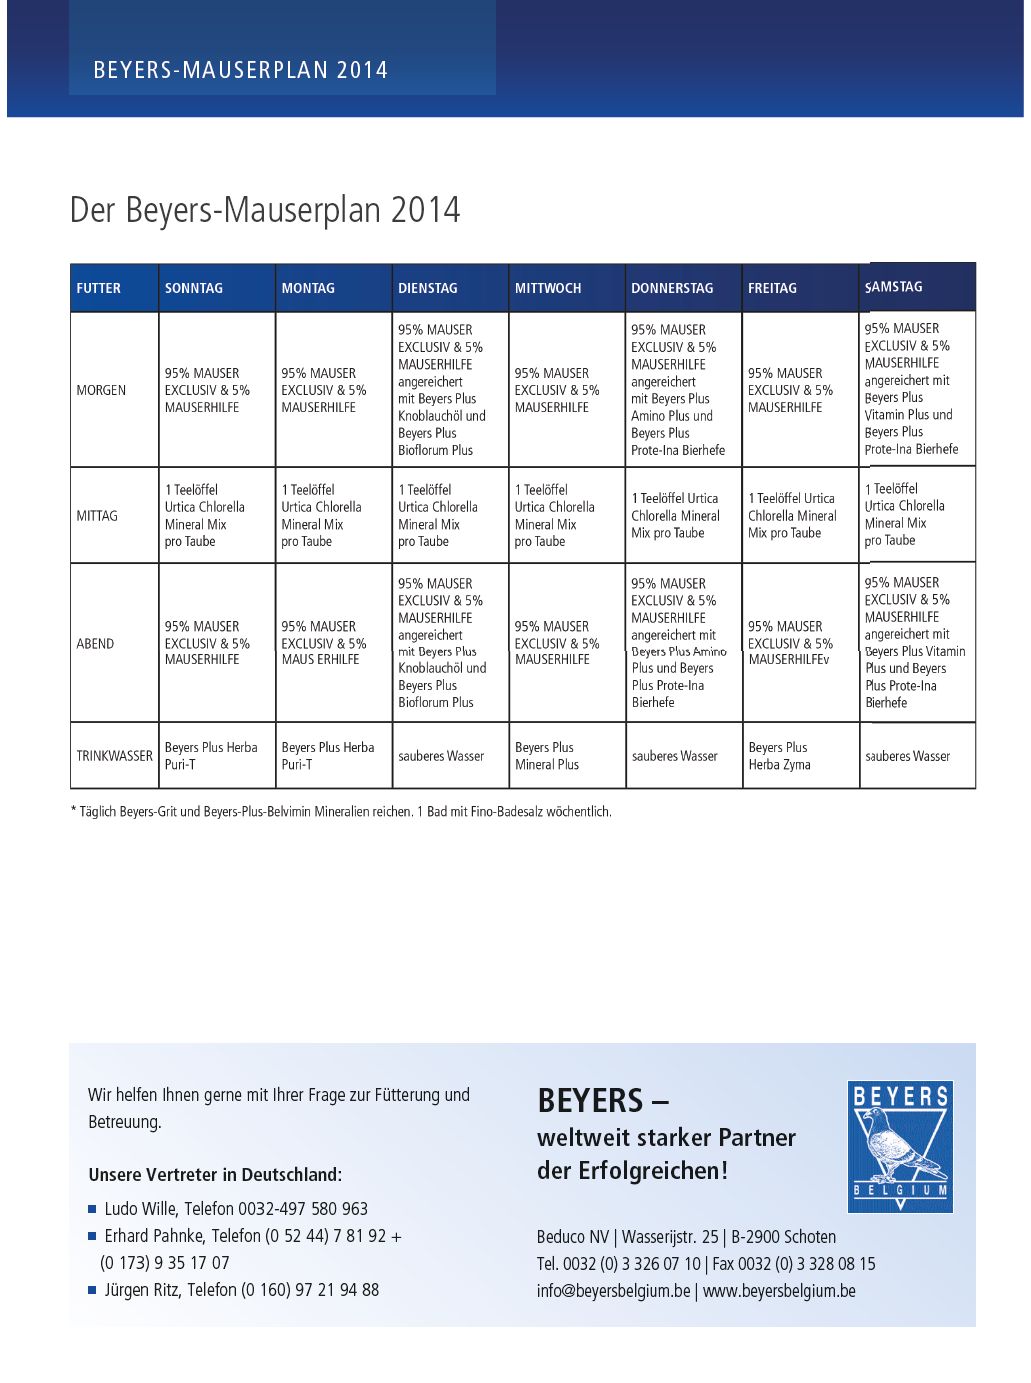 beyers newsletter Oct 2014_8